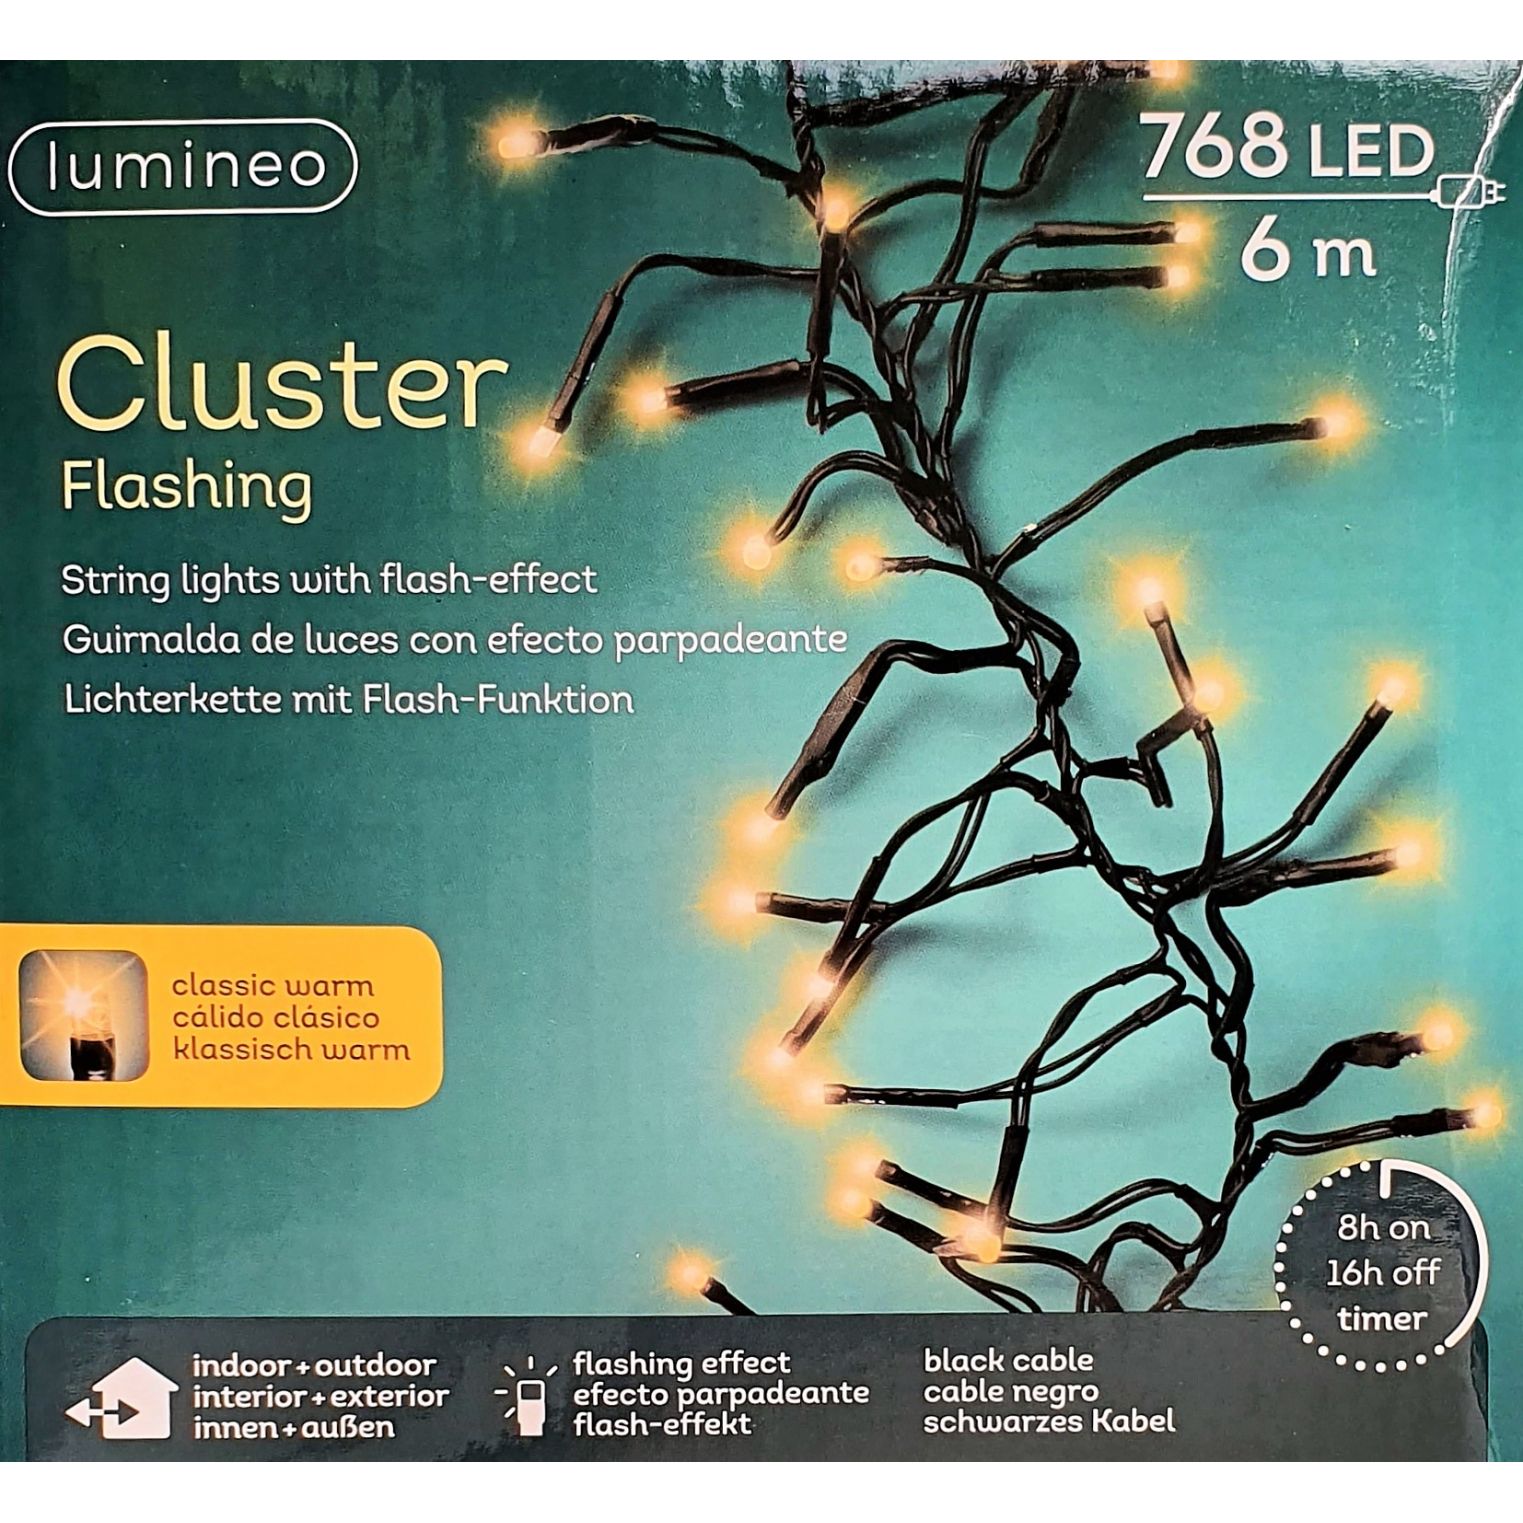 Clusterverlichting lumineo Flashing 768- lamps LED 'classic warm